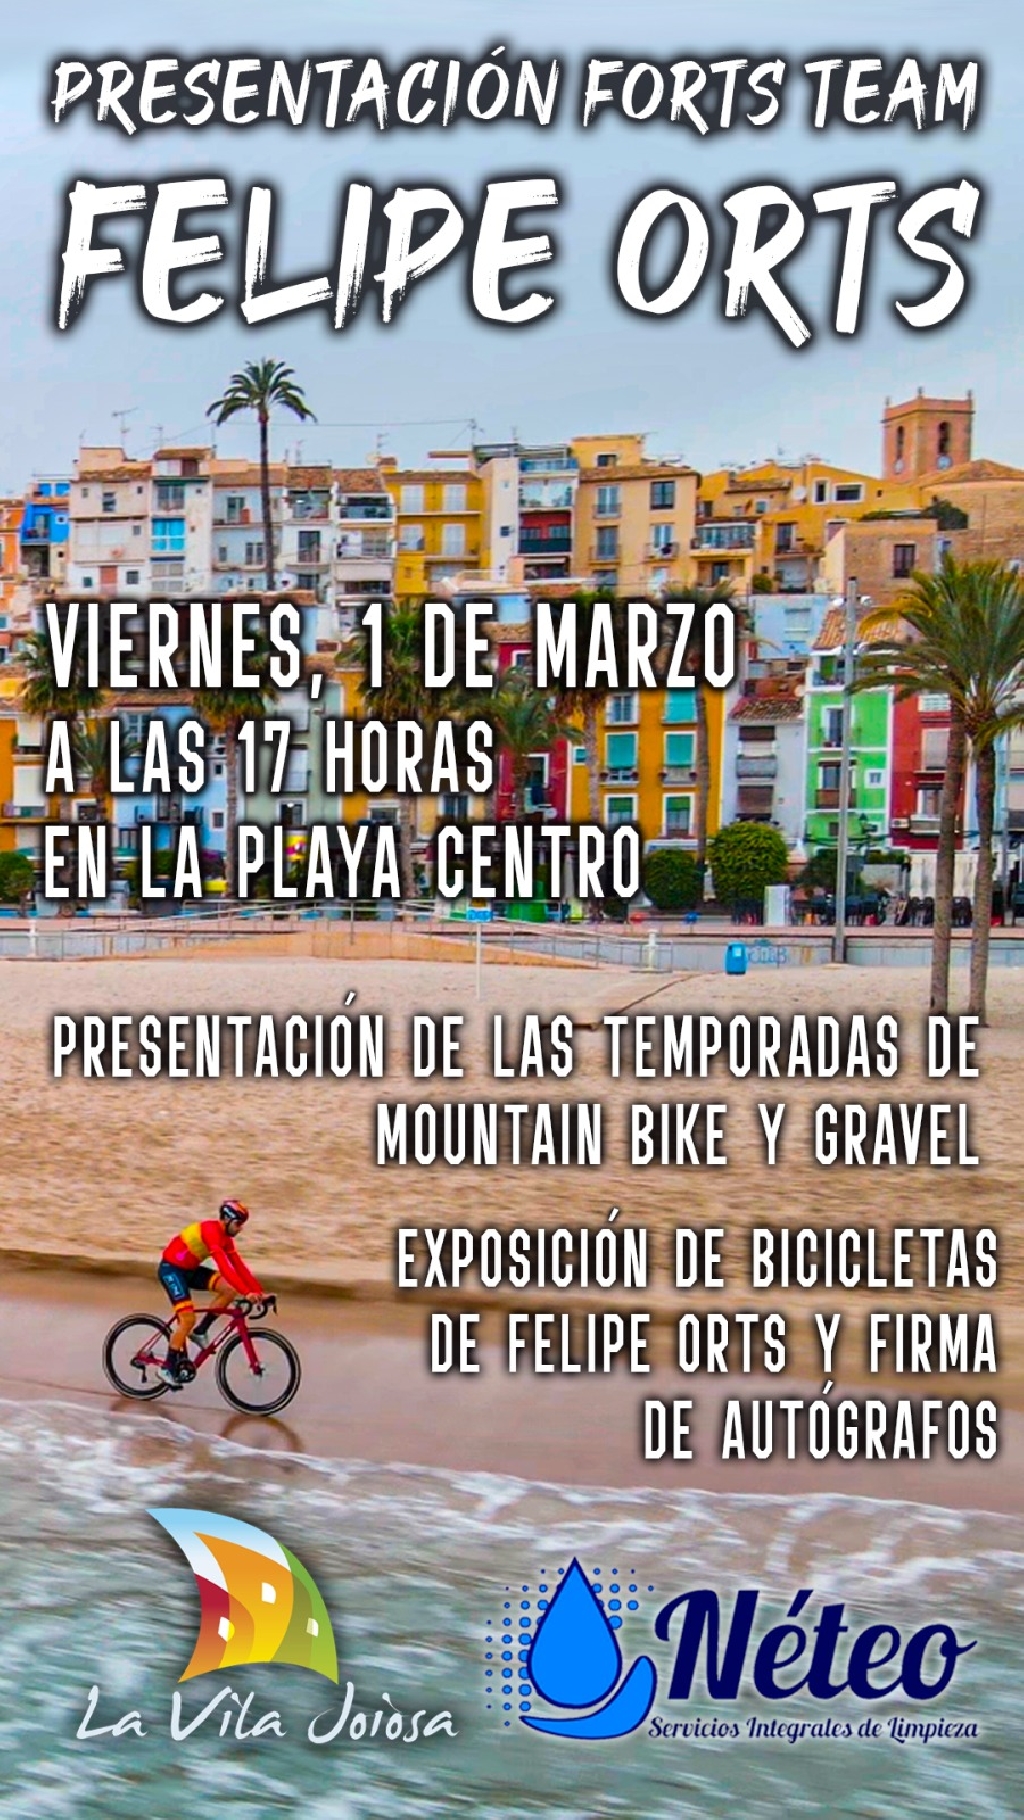 El ciclista viler Felipe Orts presenta la temporada de mountain bike i gravel a la platja centre de la Vila Joiosa